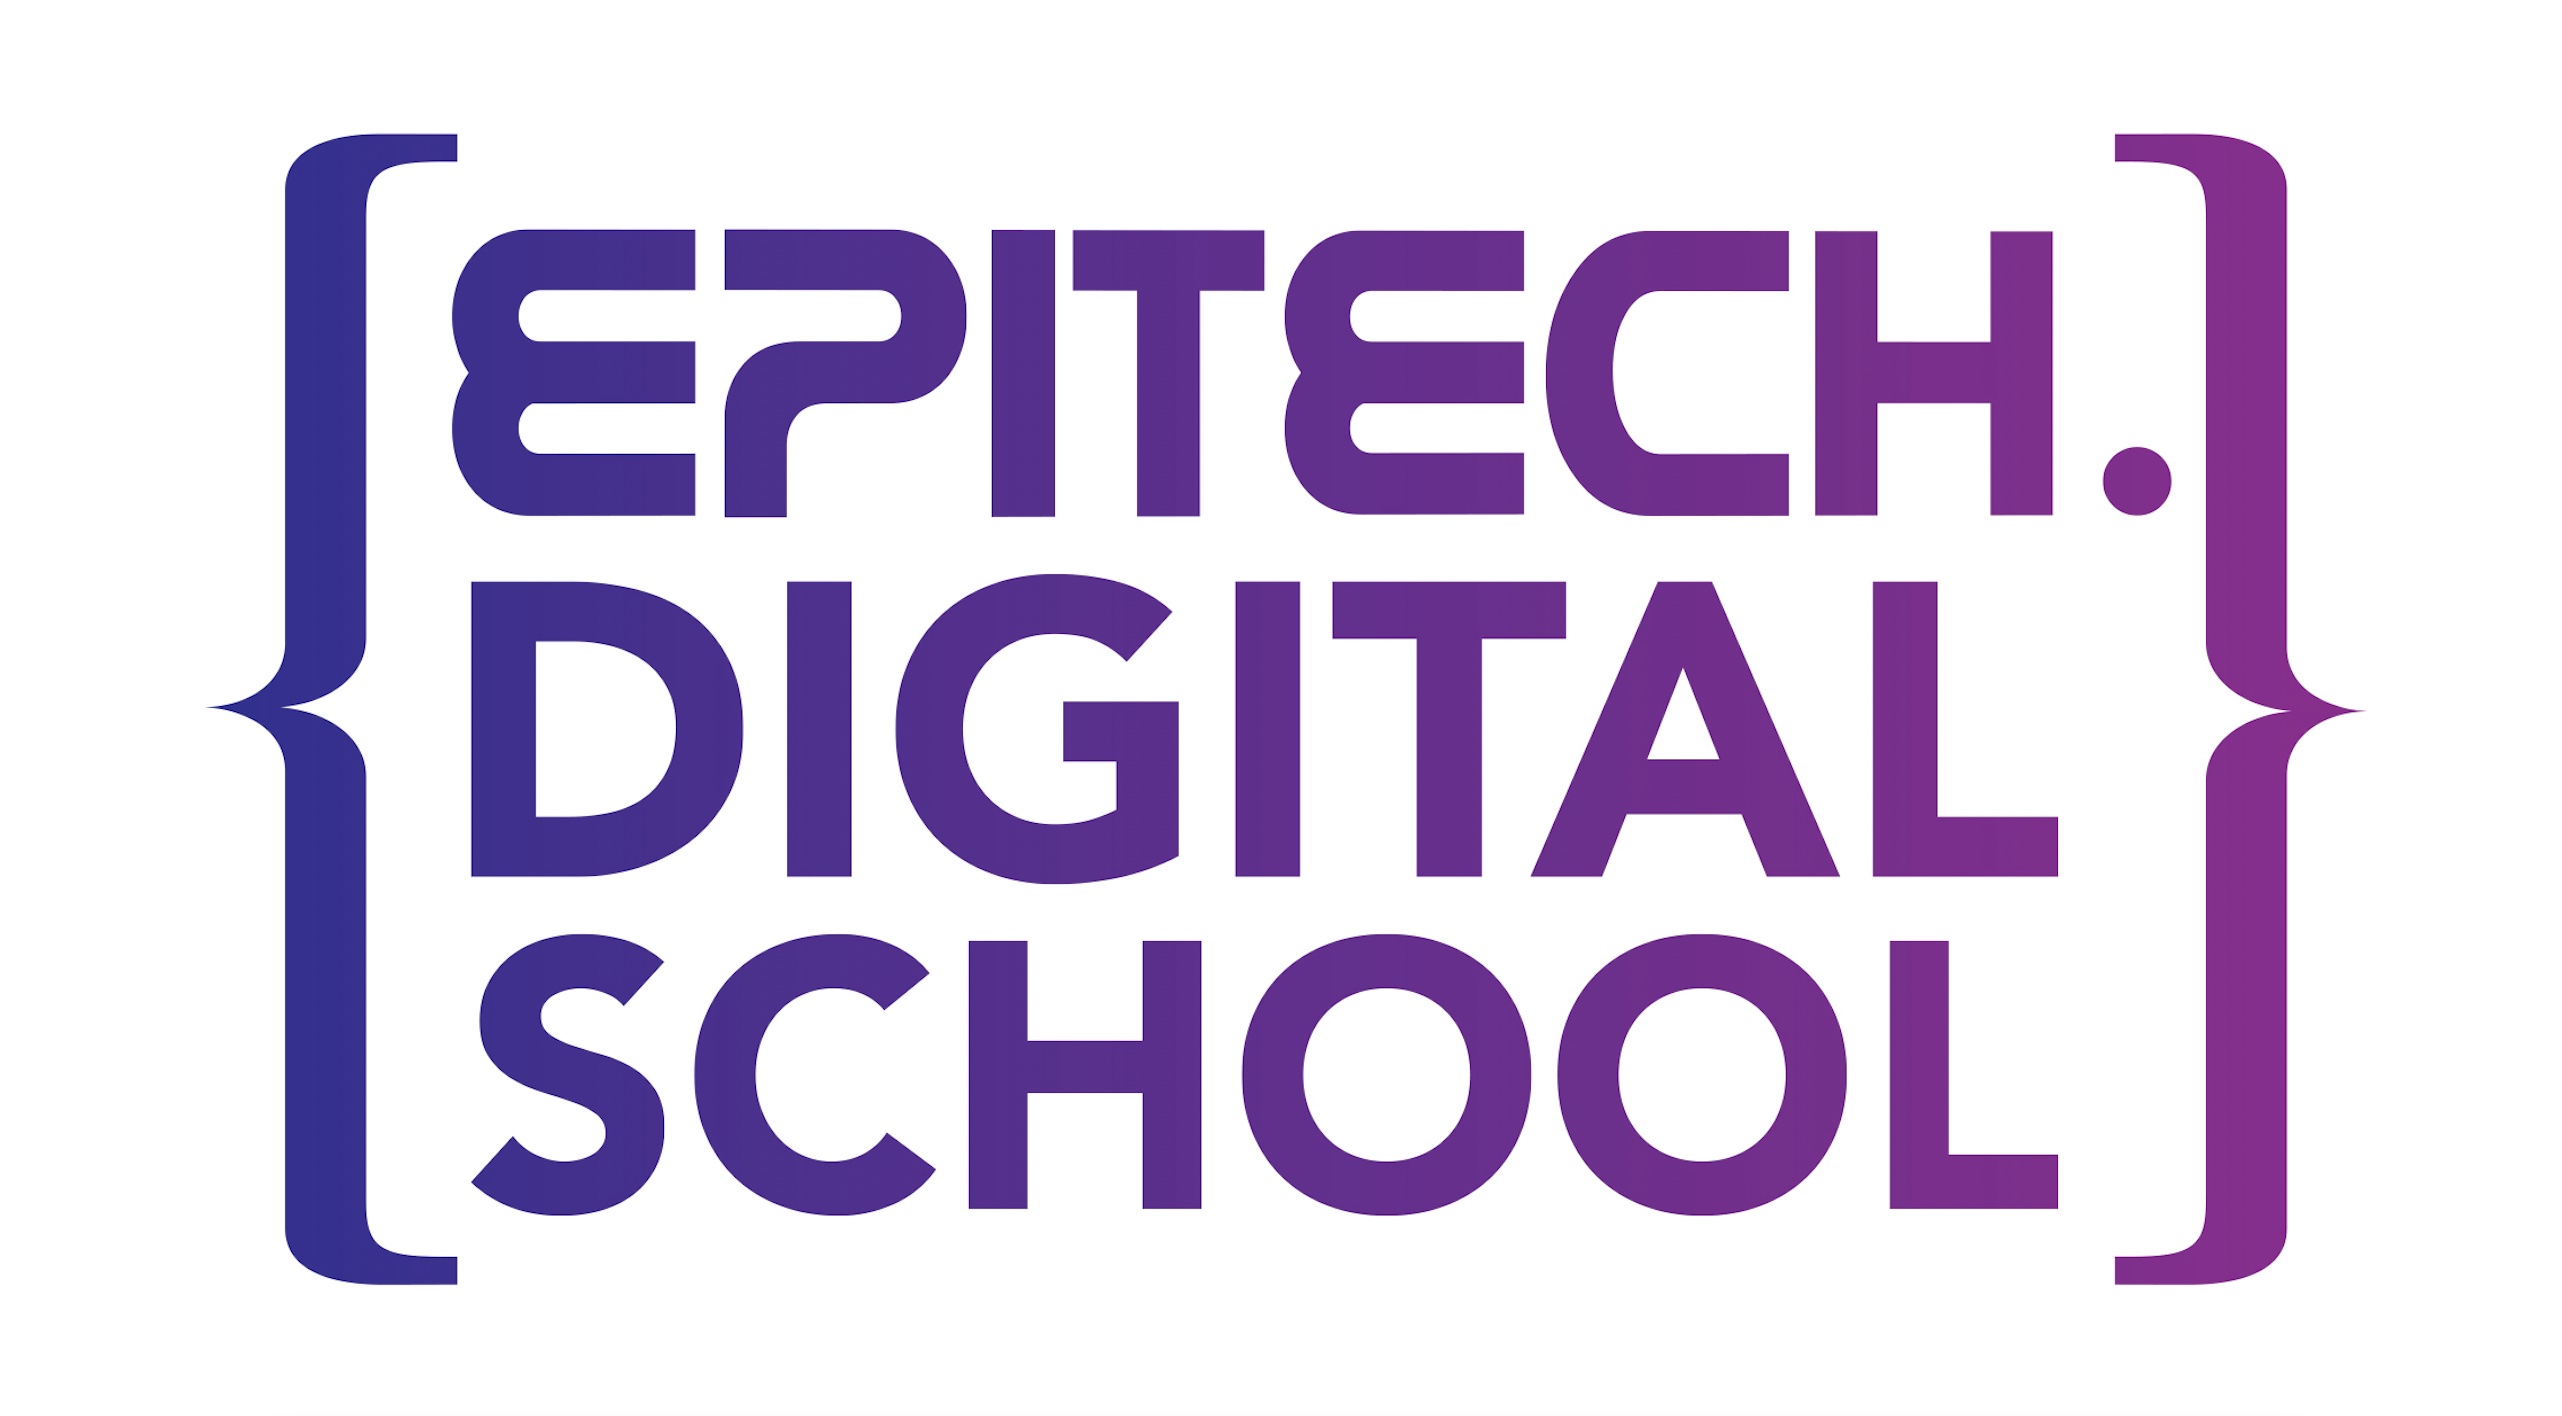 Logo Epitech Digital School